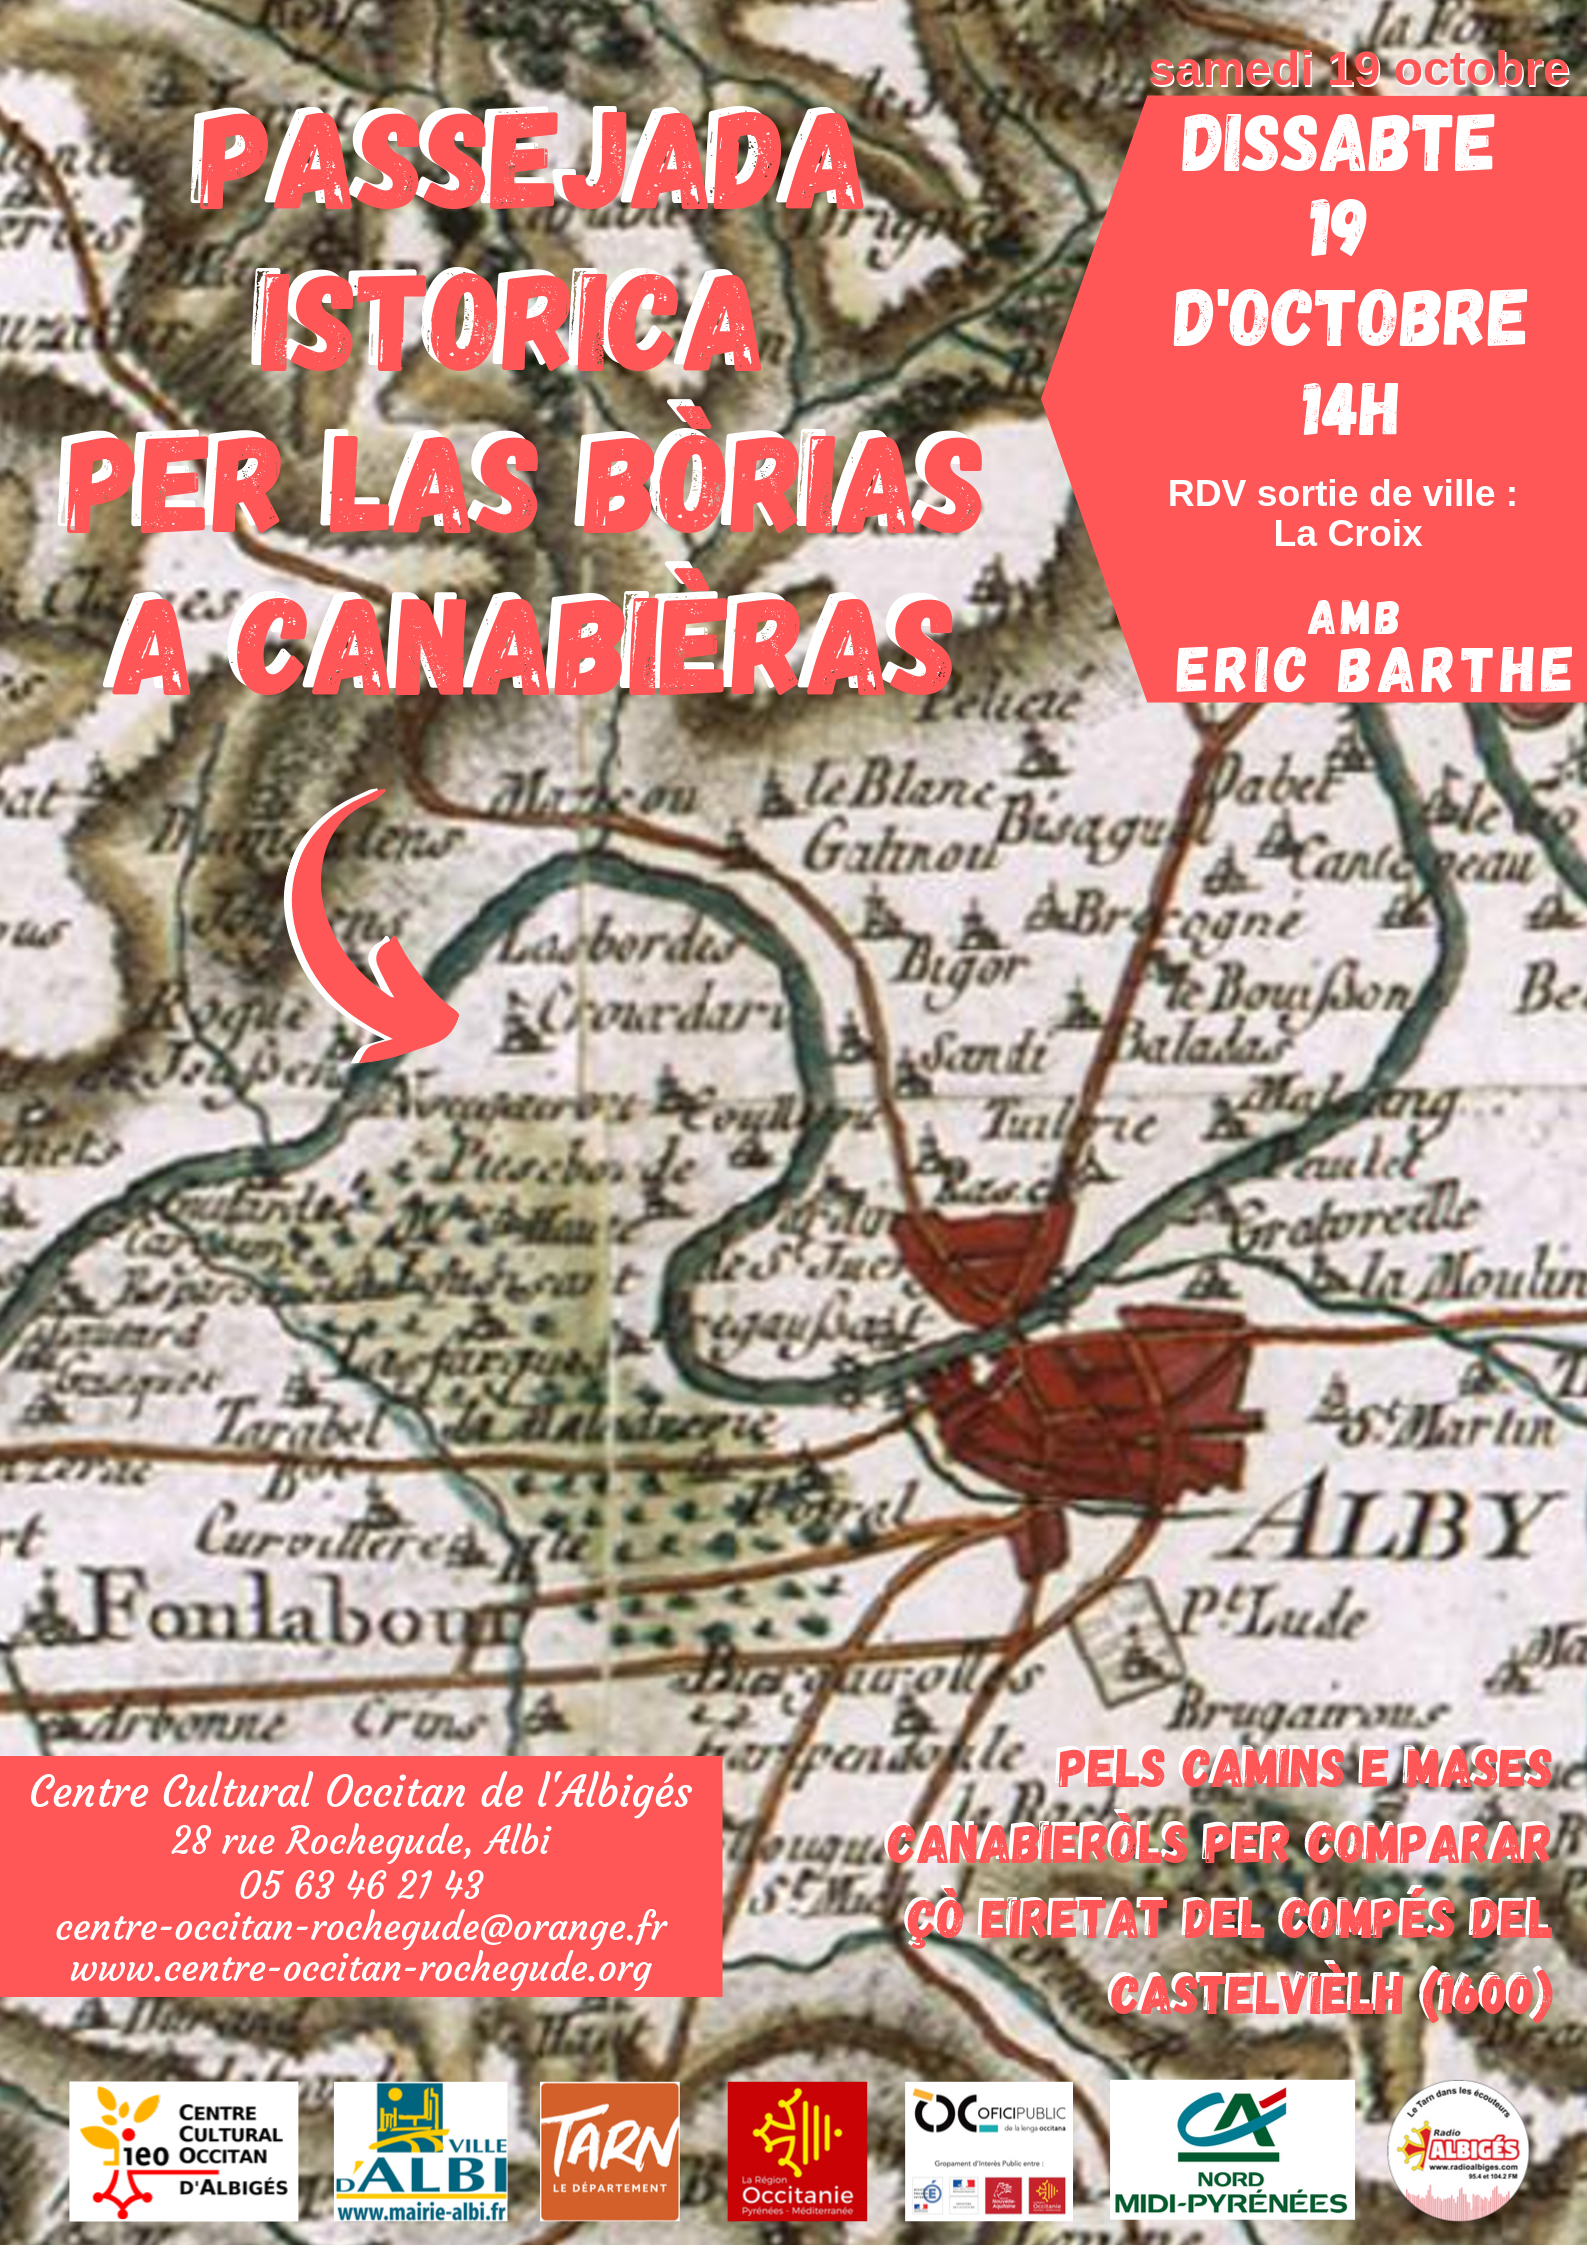 You are currently viewing Passejada istorica per las bòrias a Canabièras